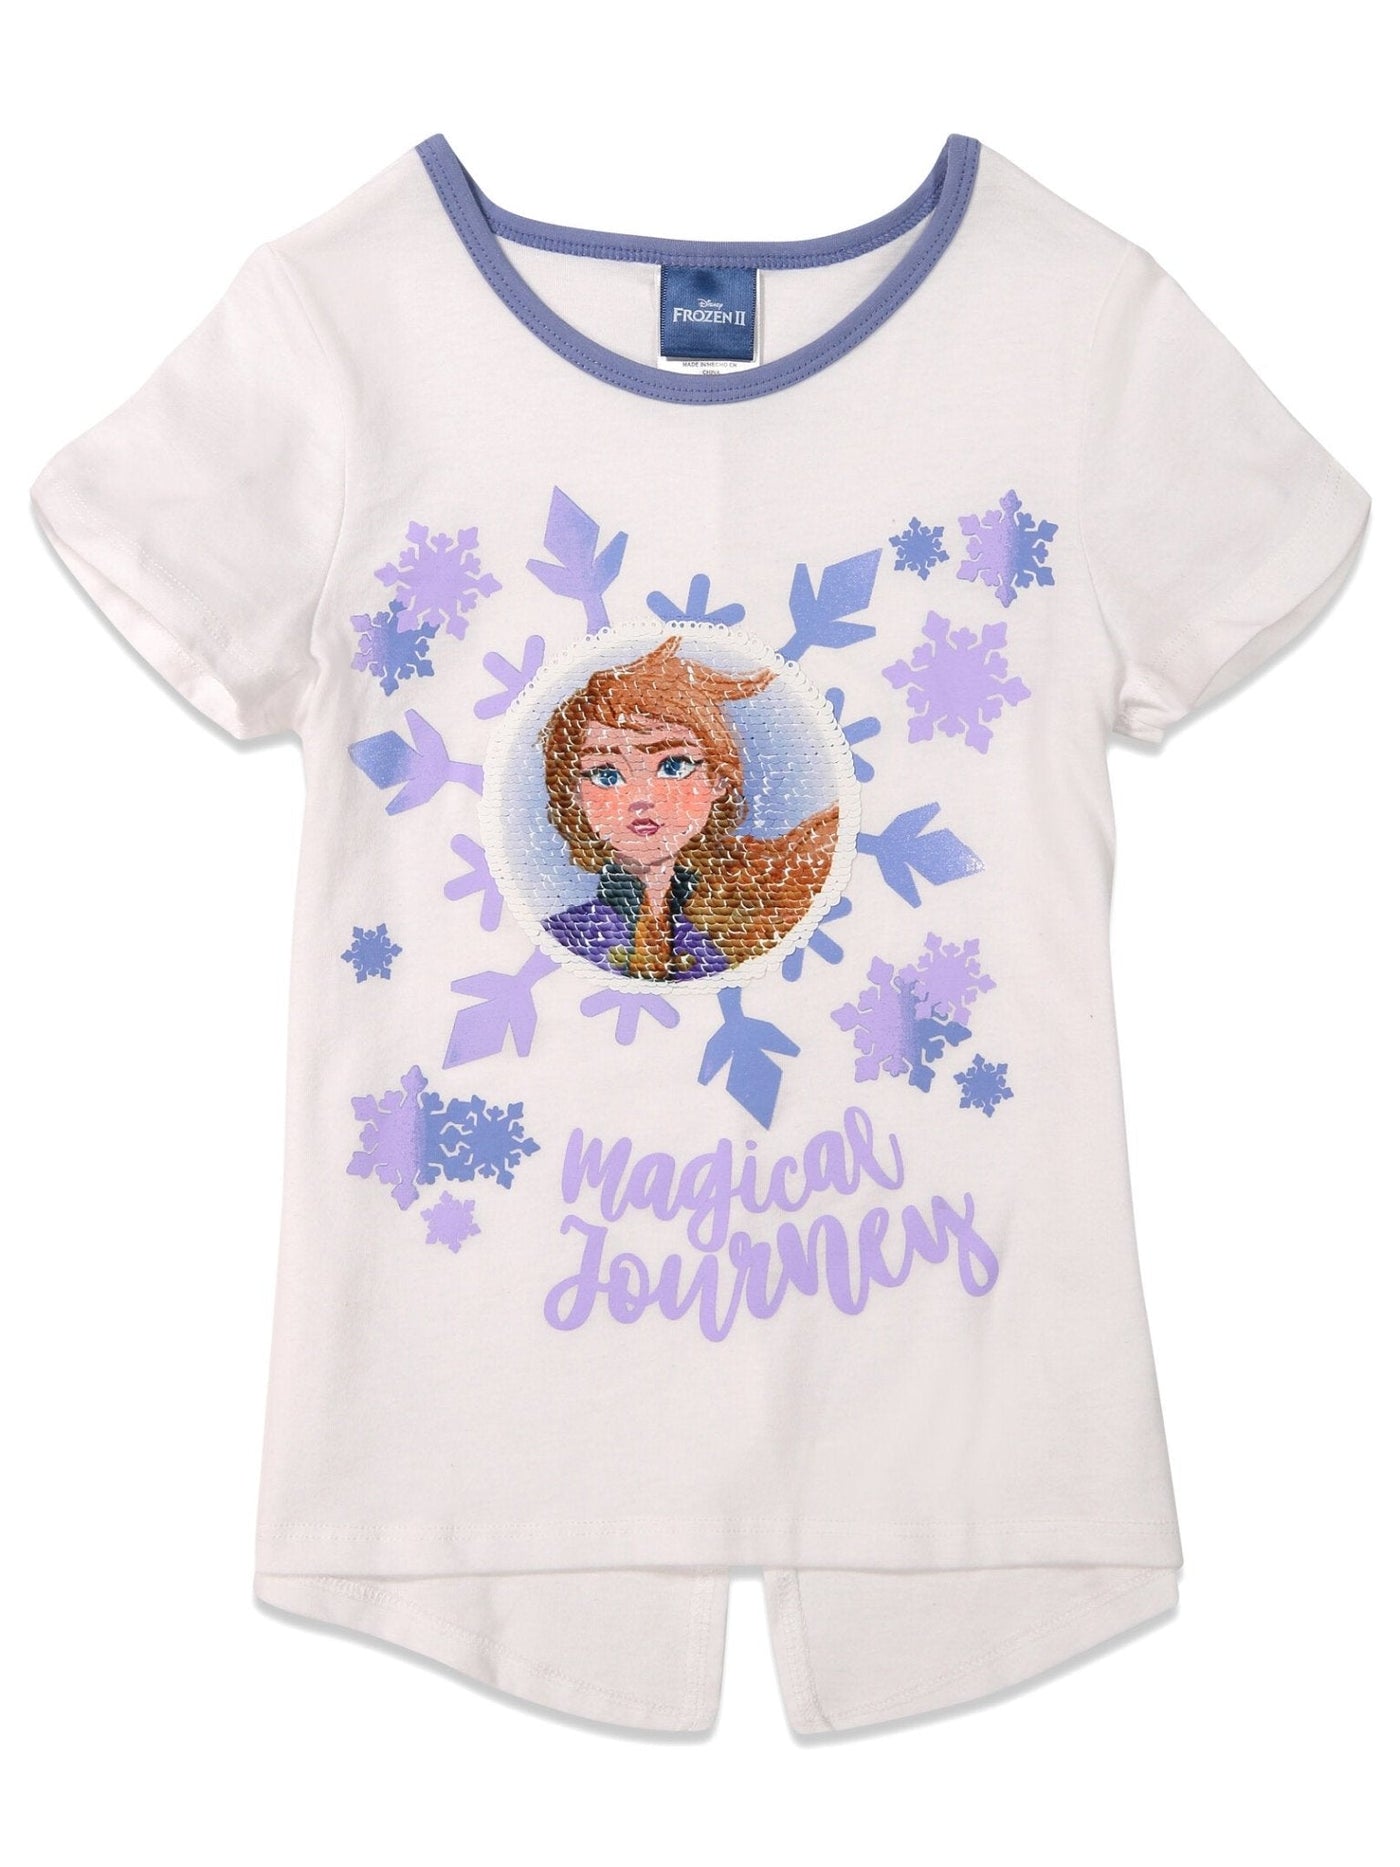 Disney Frozen Princess Anna T-Shirt and Leggings Outfit Set - imagikids